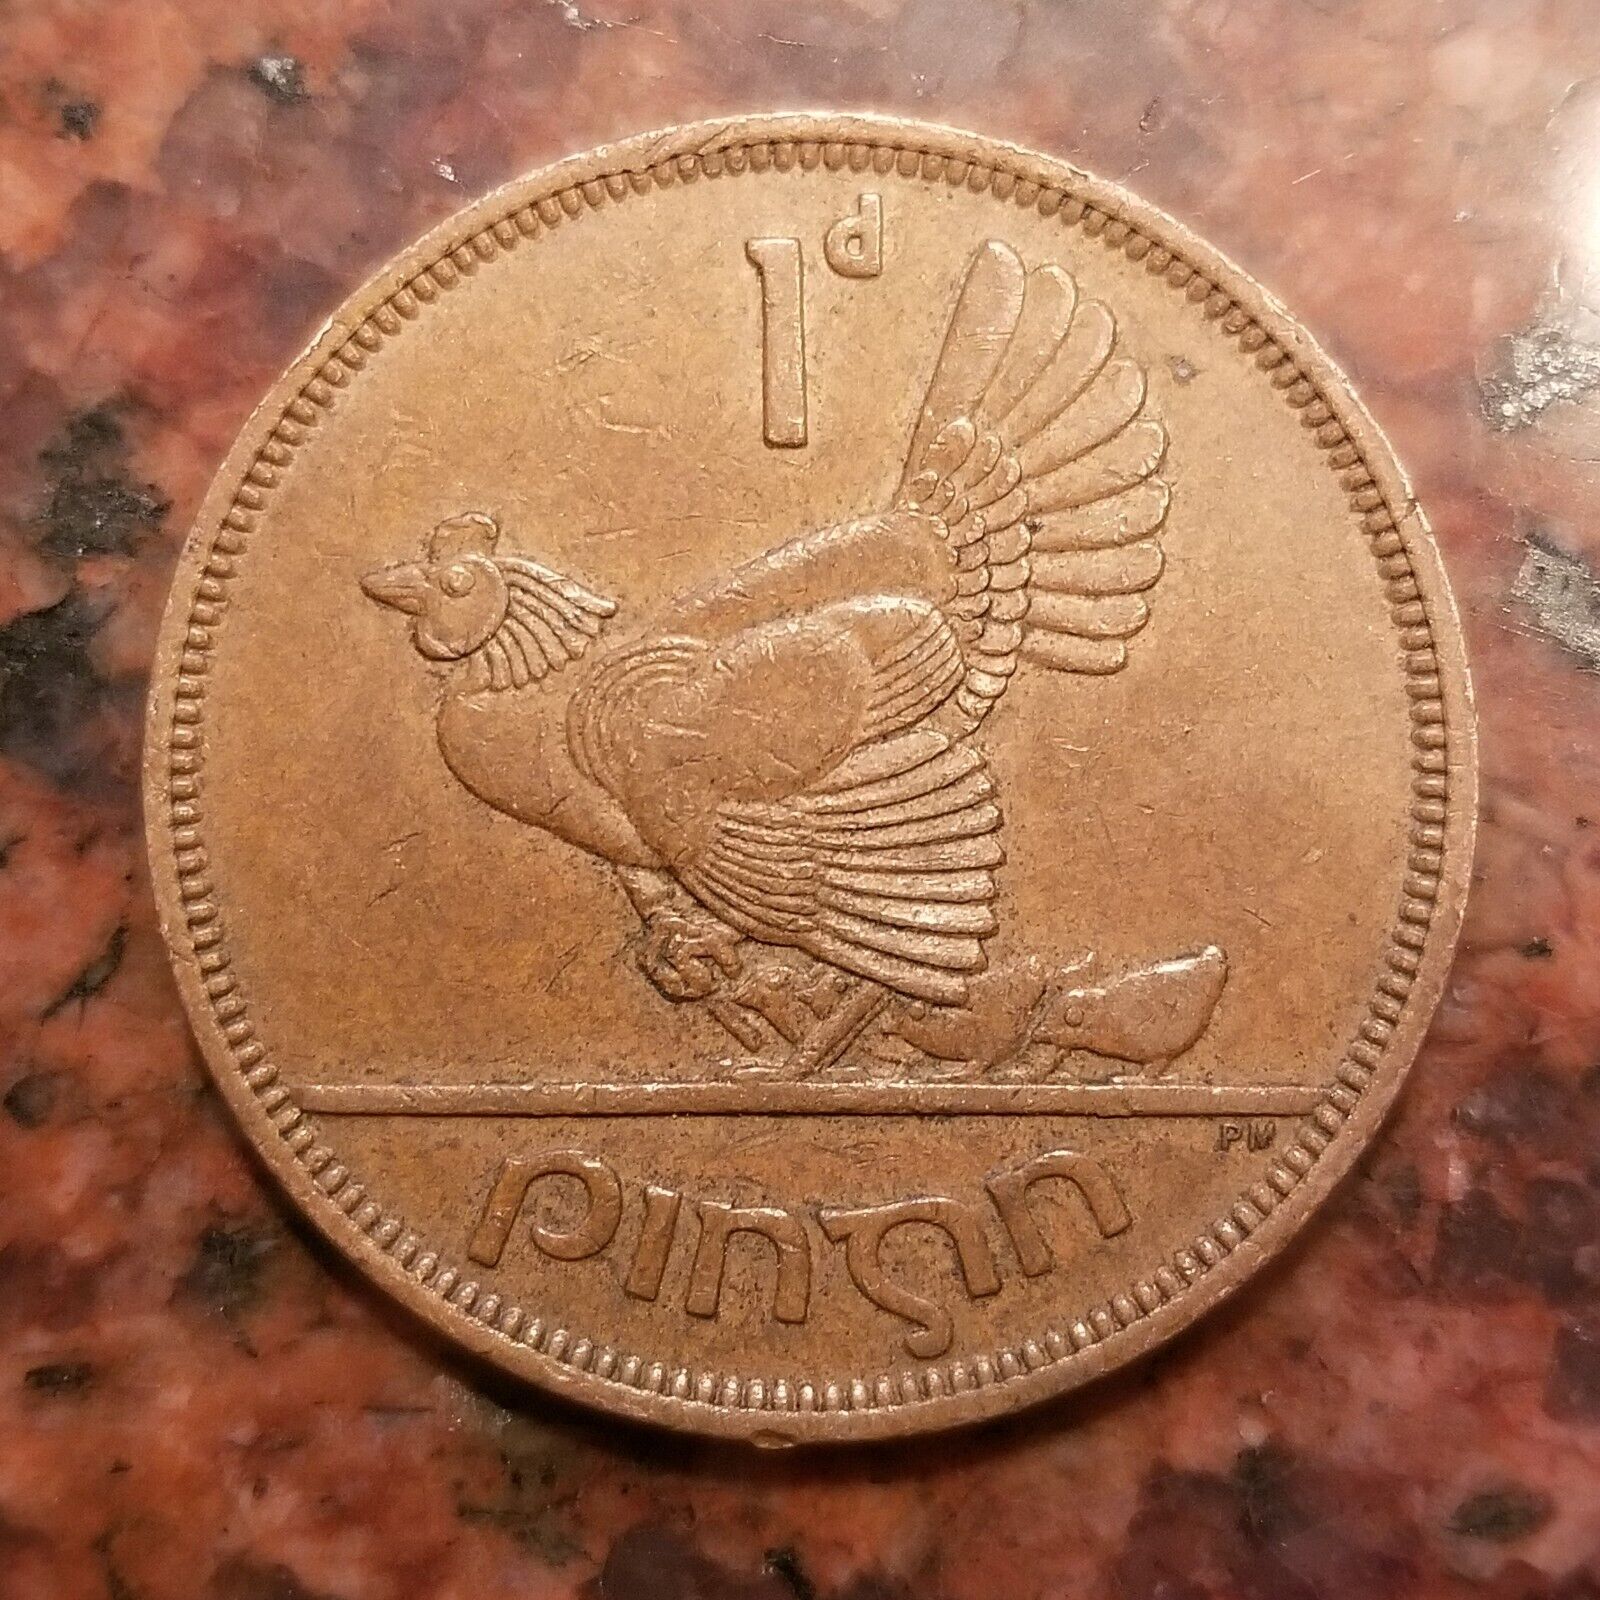 1965 Ireland 1 Pingin Coin - #a8279